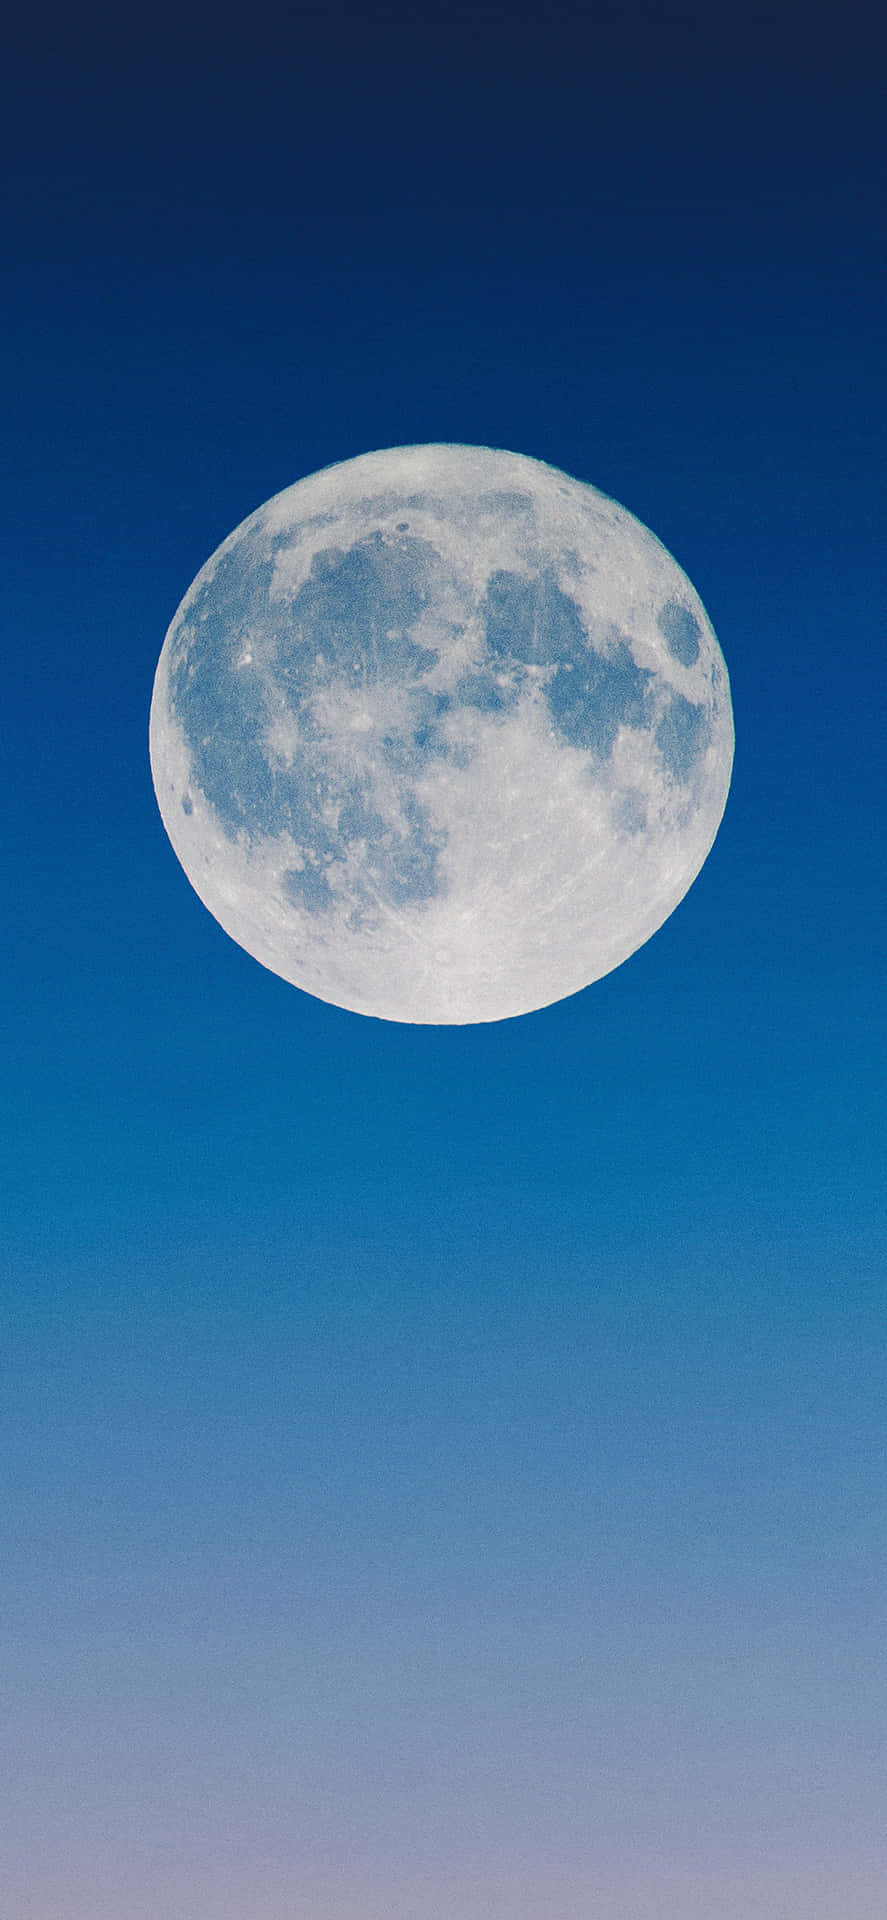 Den Blå Måne Skud iPhone Wallpaper